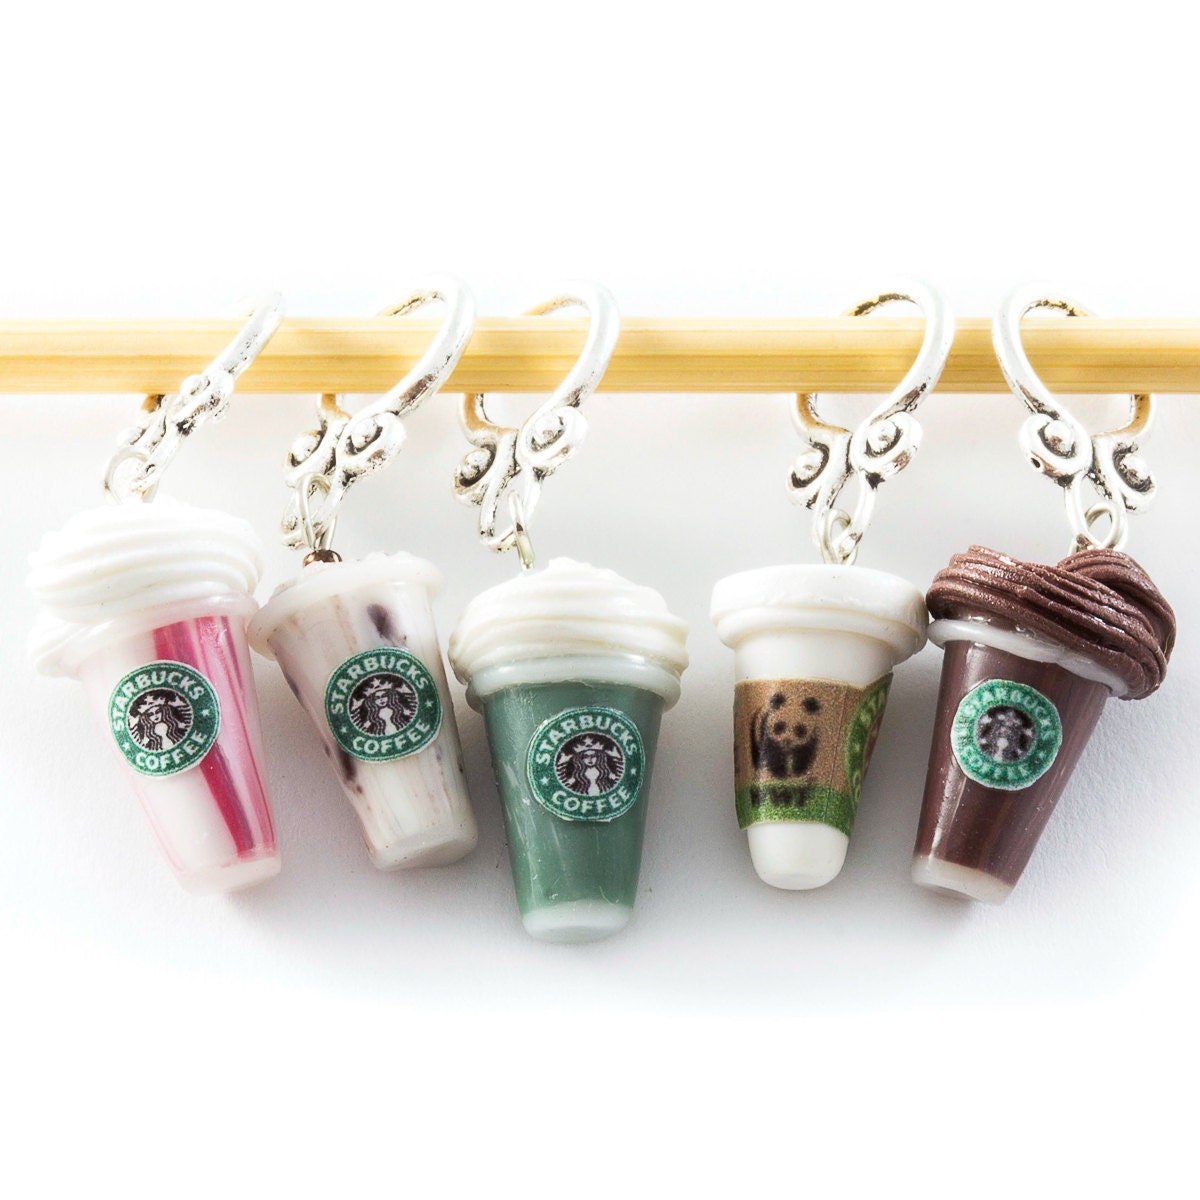 Knitting stitch markers - miniature "Starbucks" cups set of five